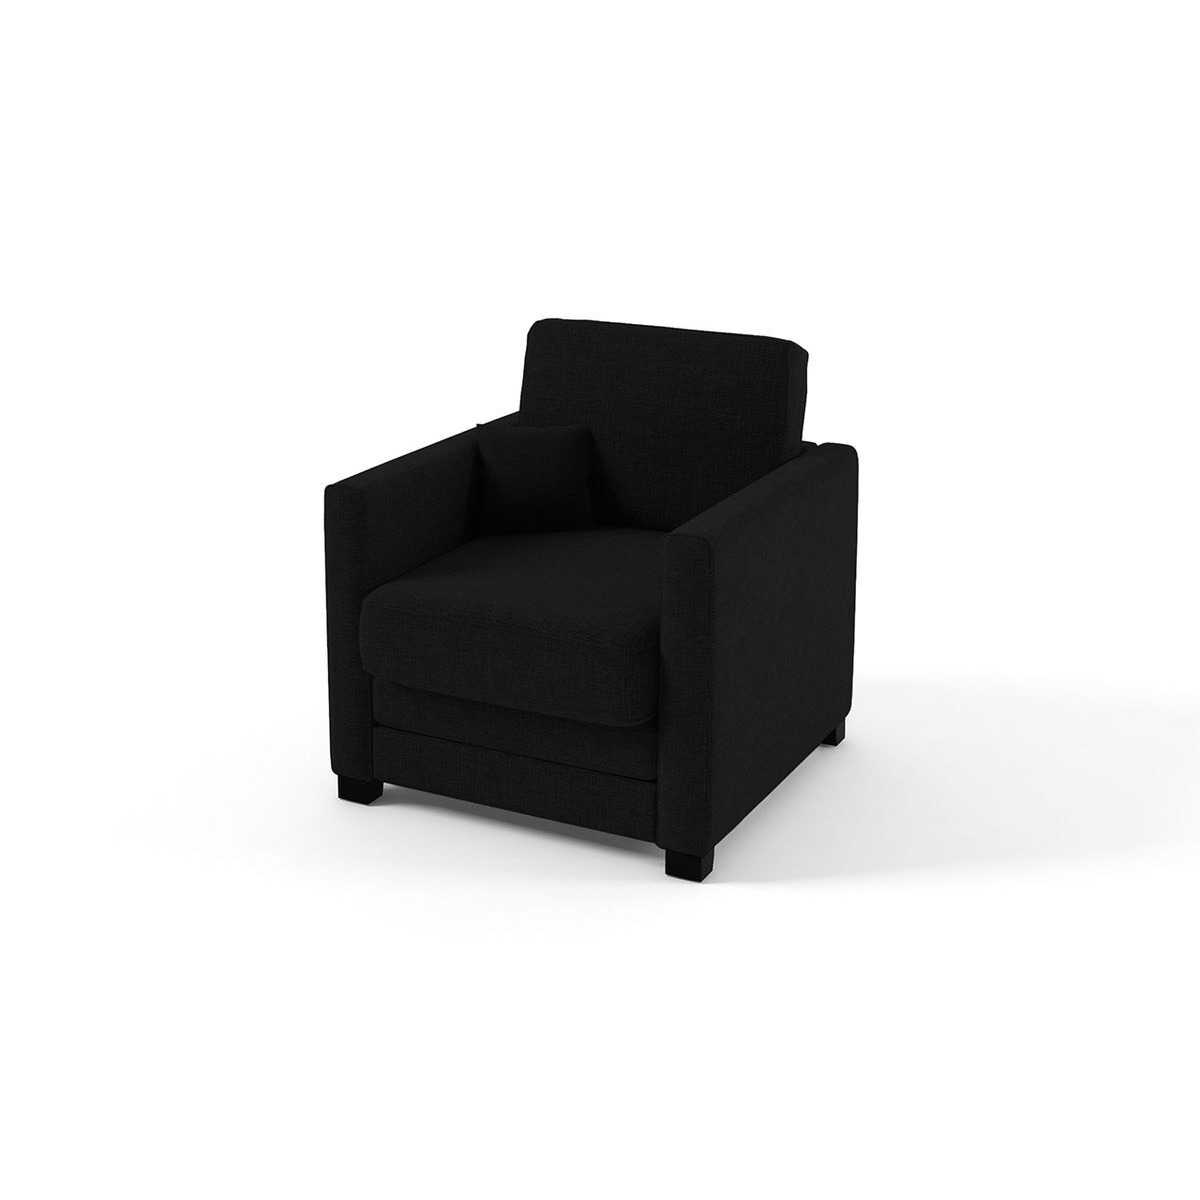 Boom Chair Sofa Bed, black - image 1